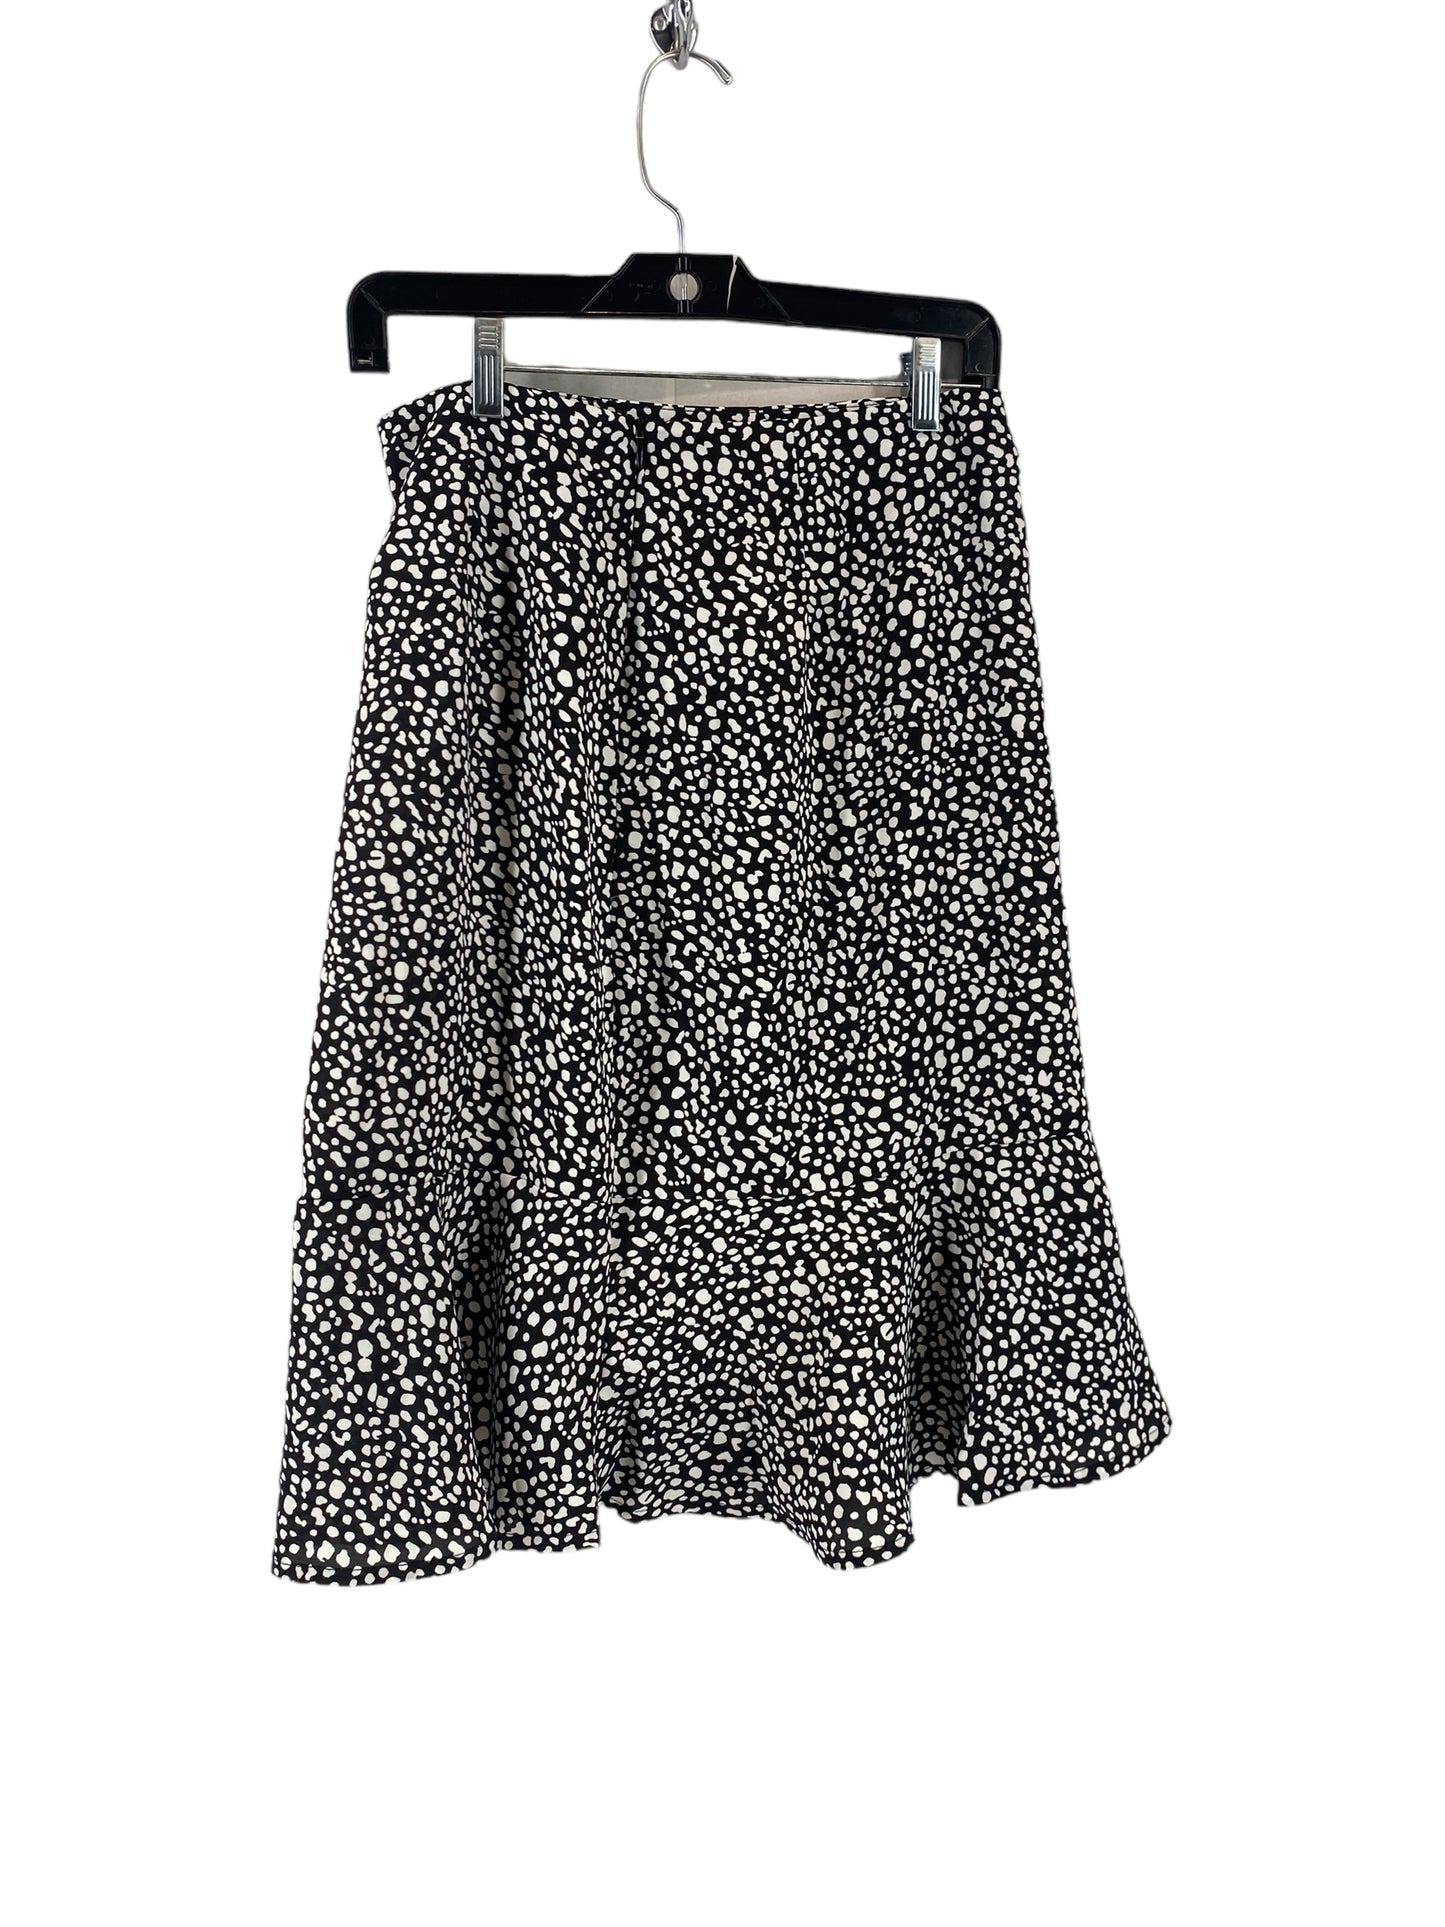 Skirt Midi By Shein  Size: M